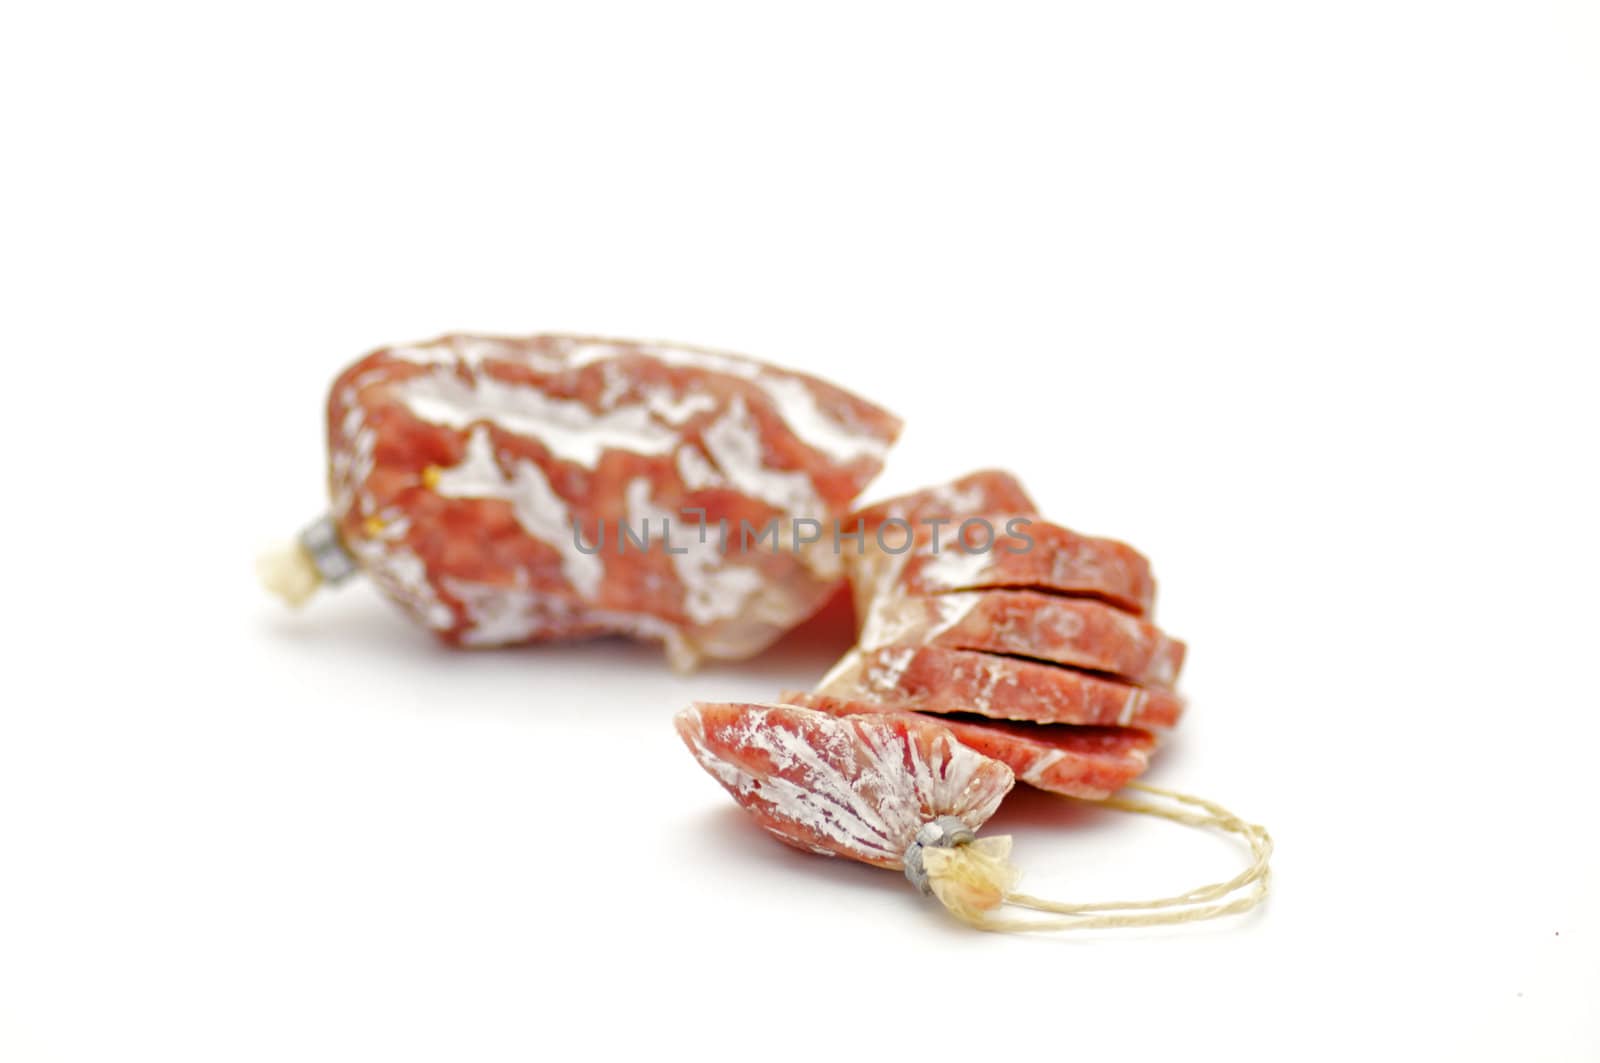 Sliced salami salchichone isolated on white background